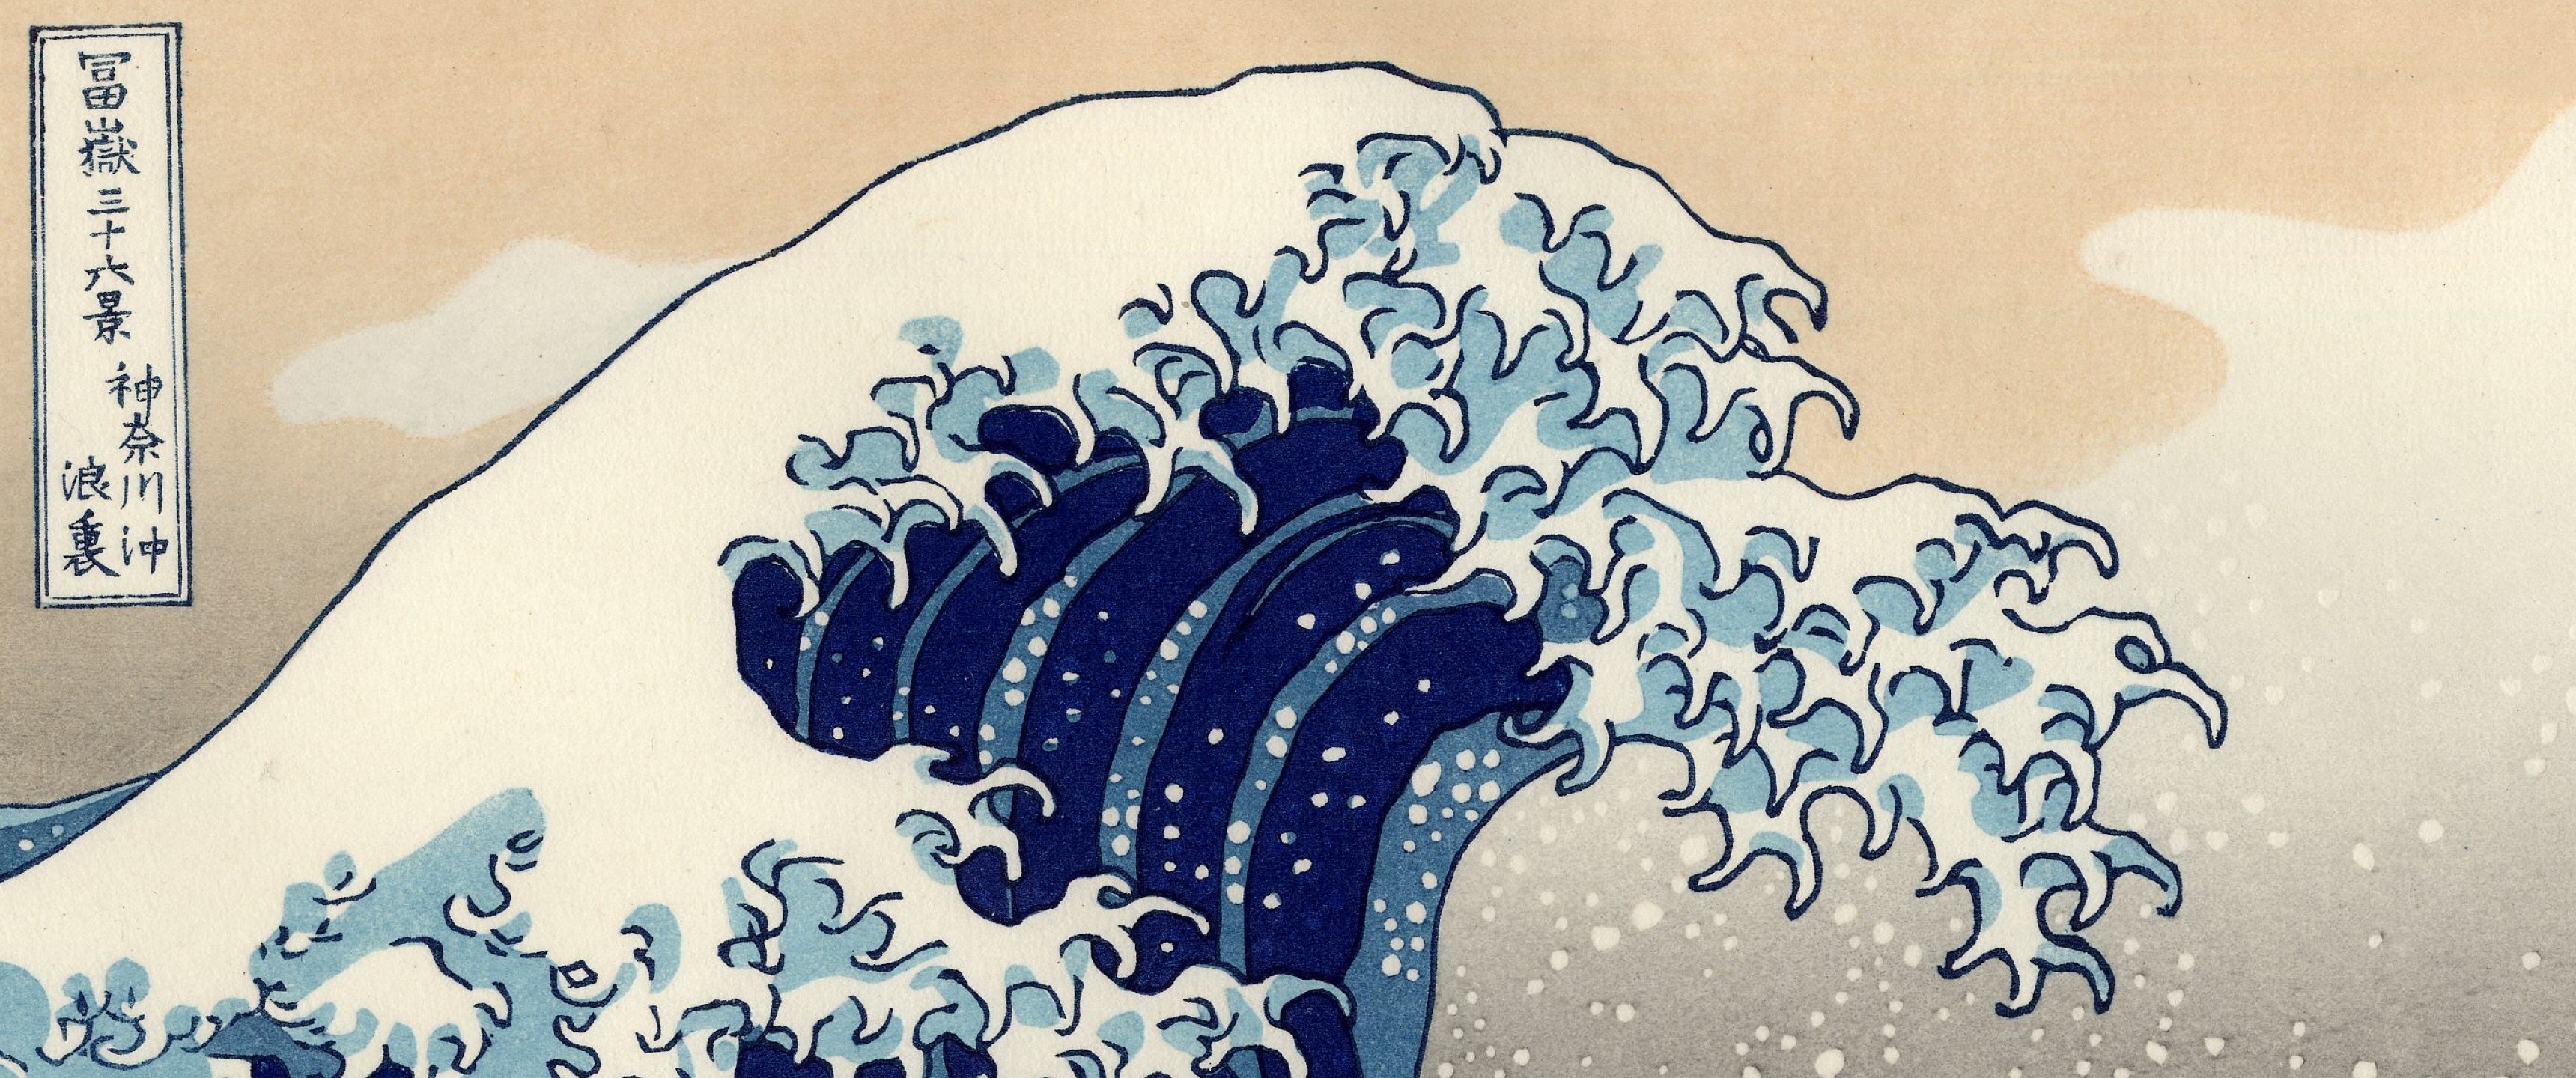 General 3440x1440 artwork waves sea The Great Wave of Kanagawa Ukiyo-e